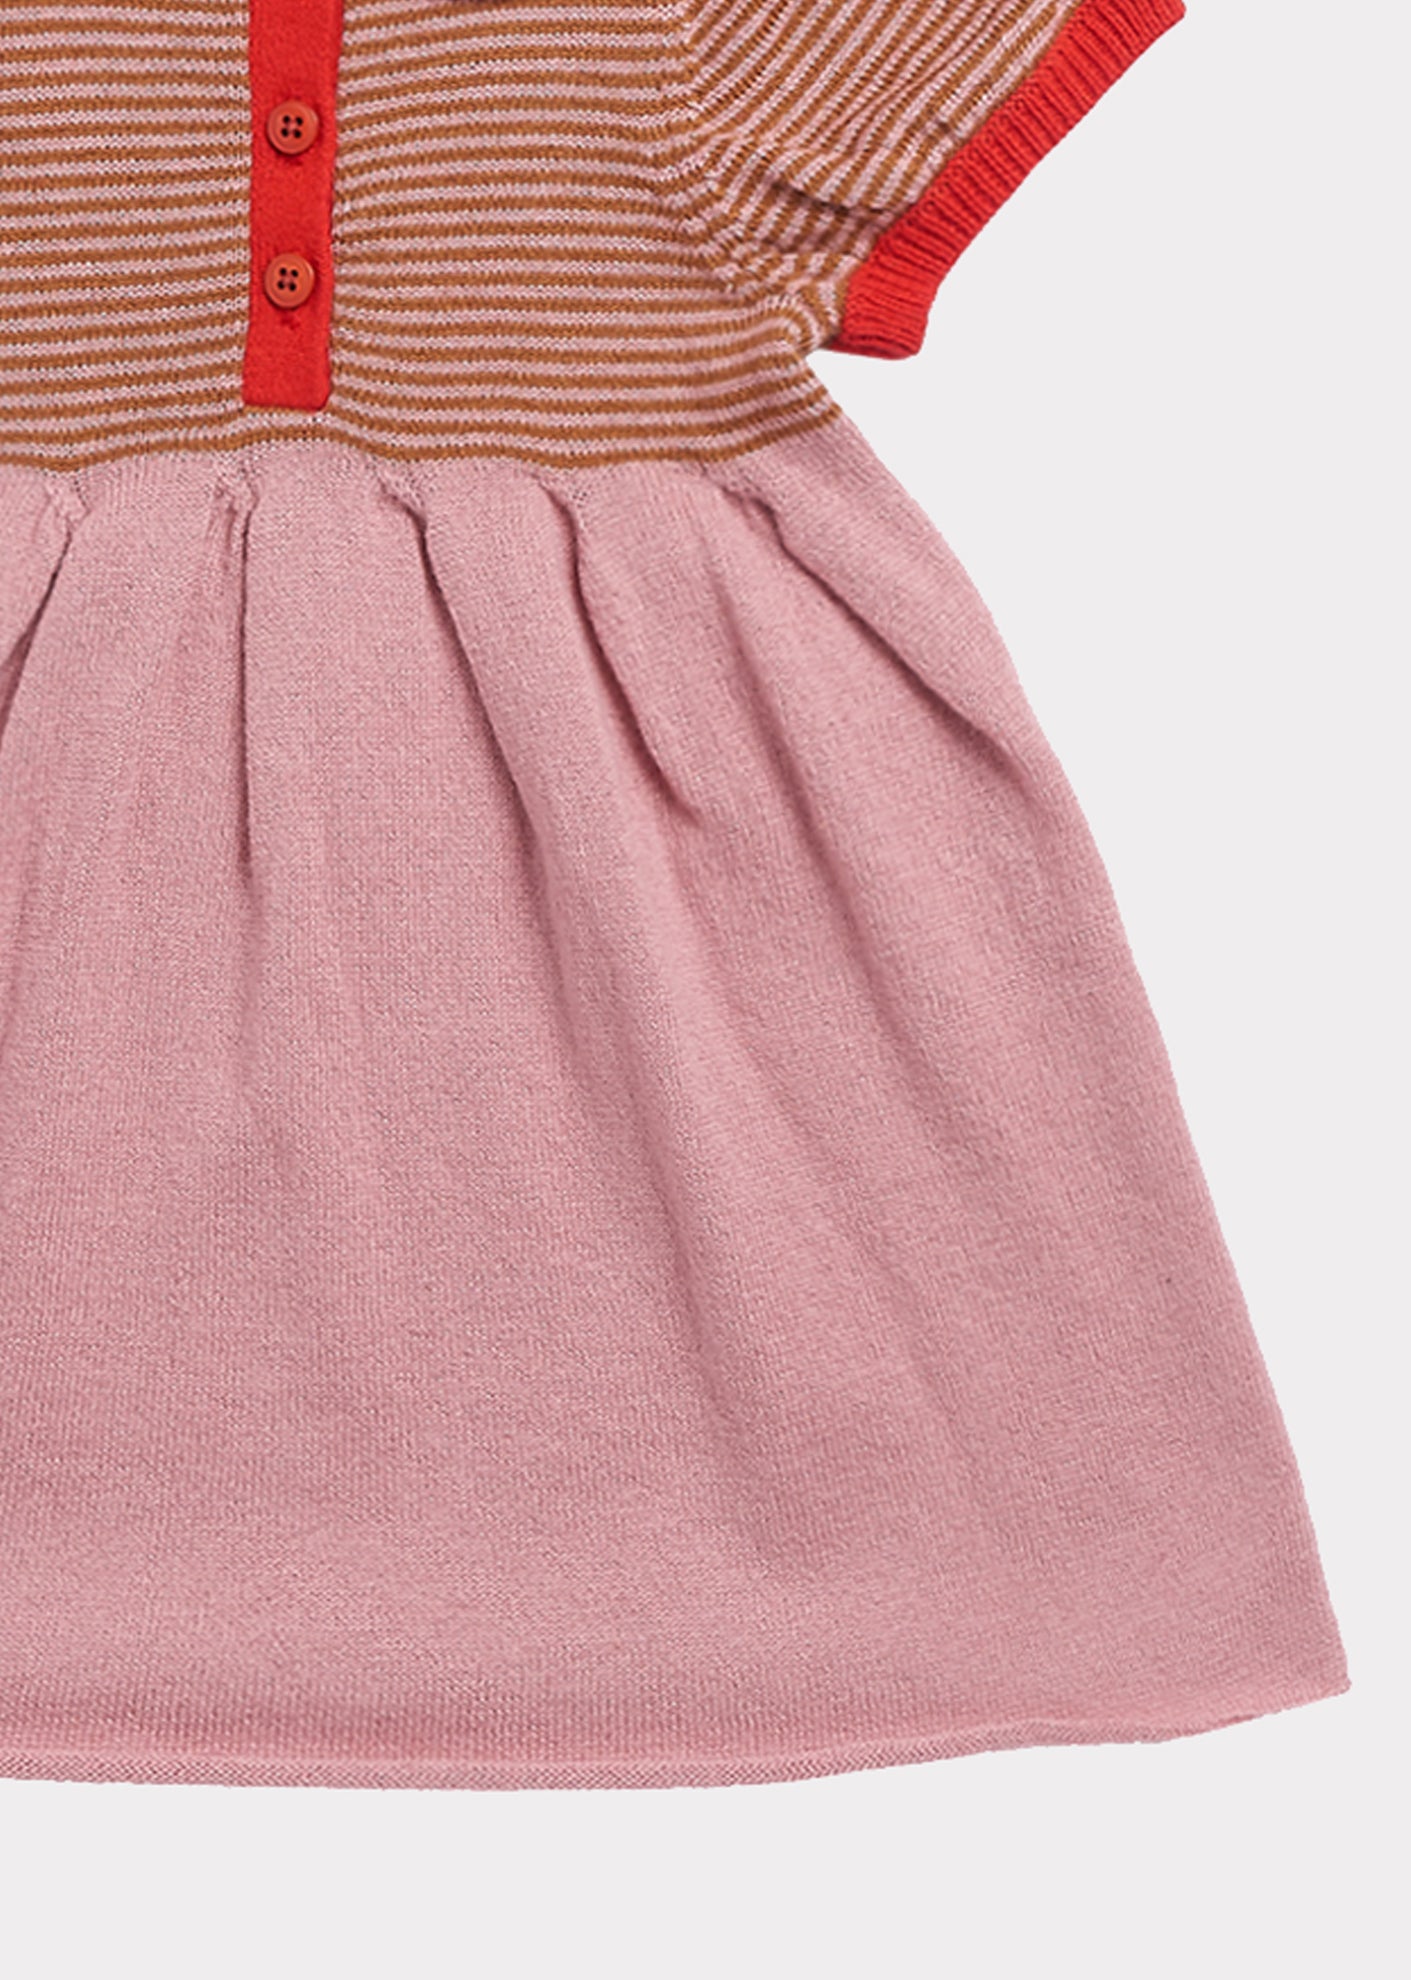 Baby Girls Pink Stripe Knit Cotton Dress